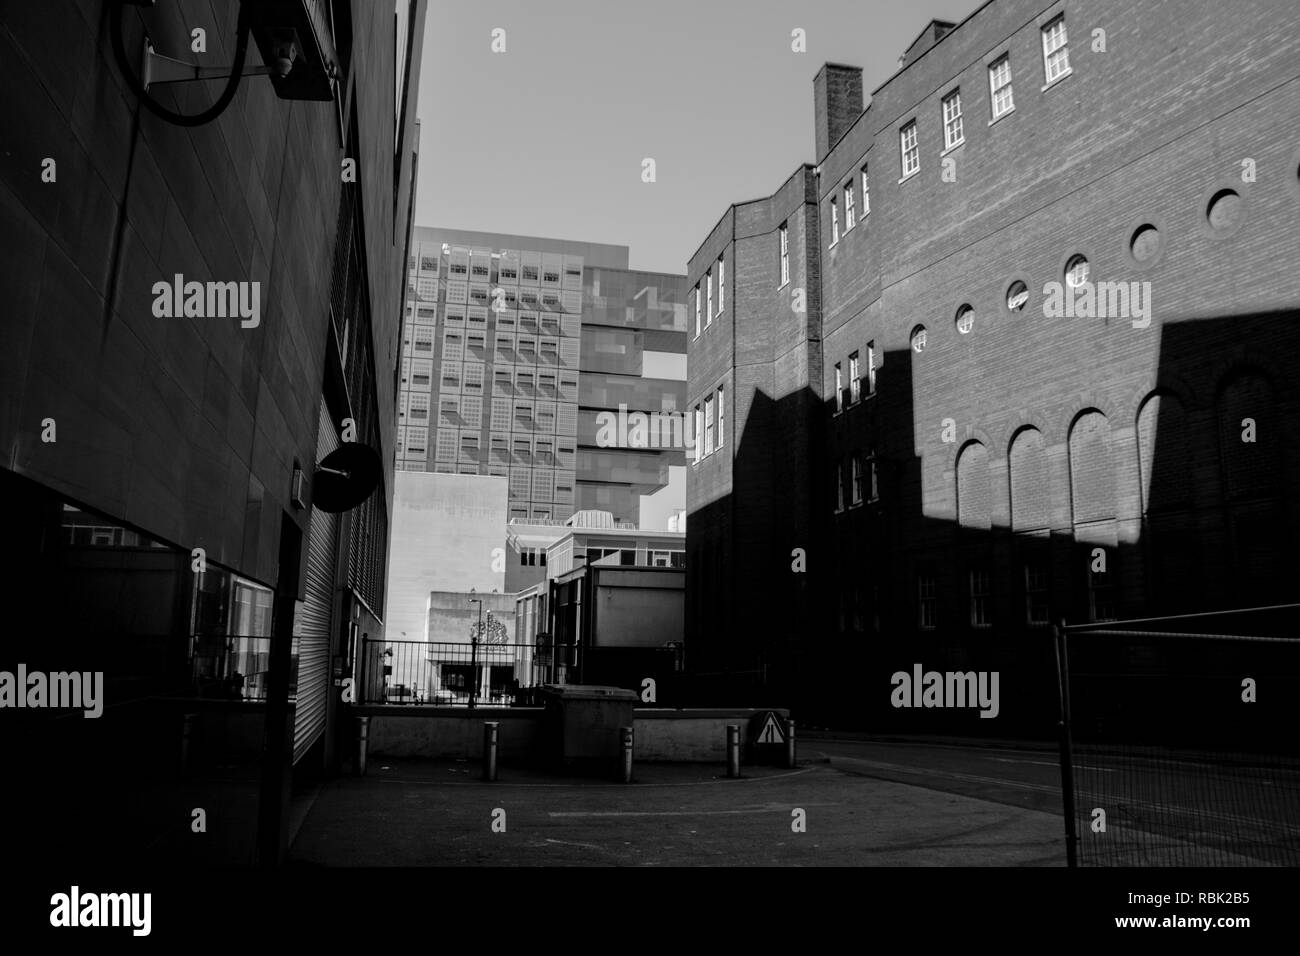 Manchester Street Fotografie Stockfoto